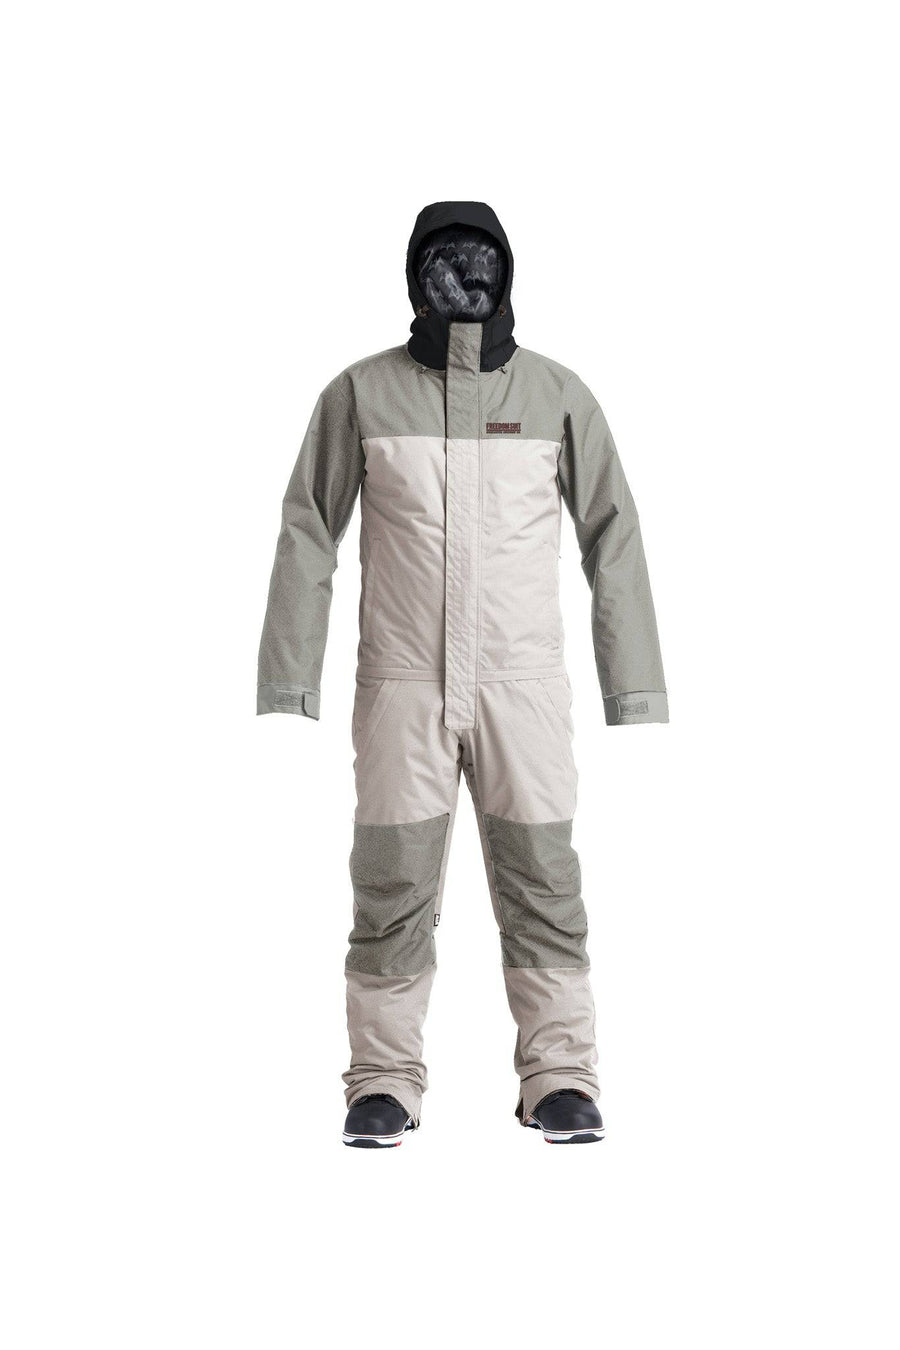 Airblaster Stretch Freedom Suit in Bone 2023